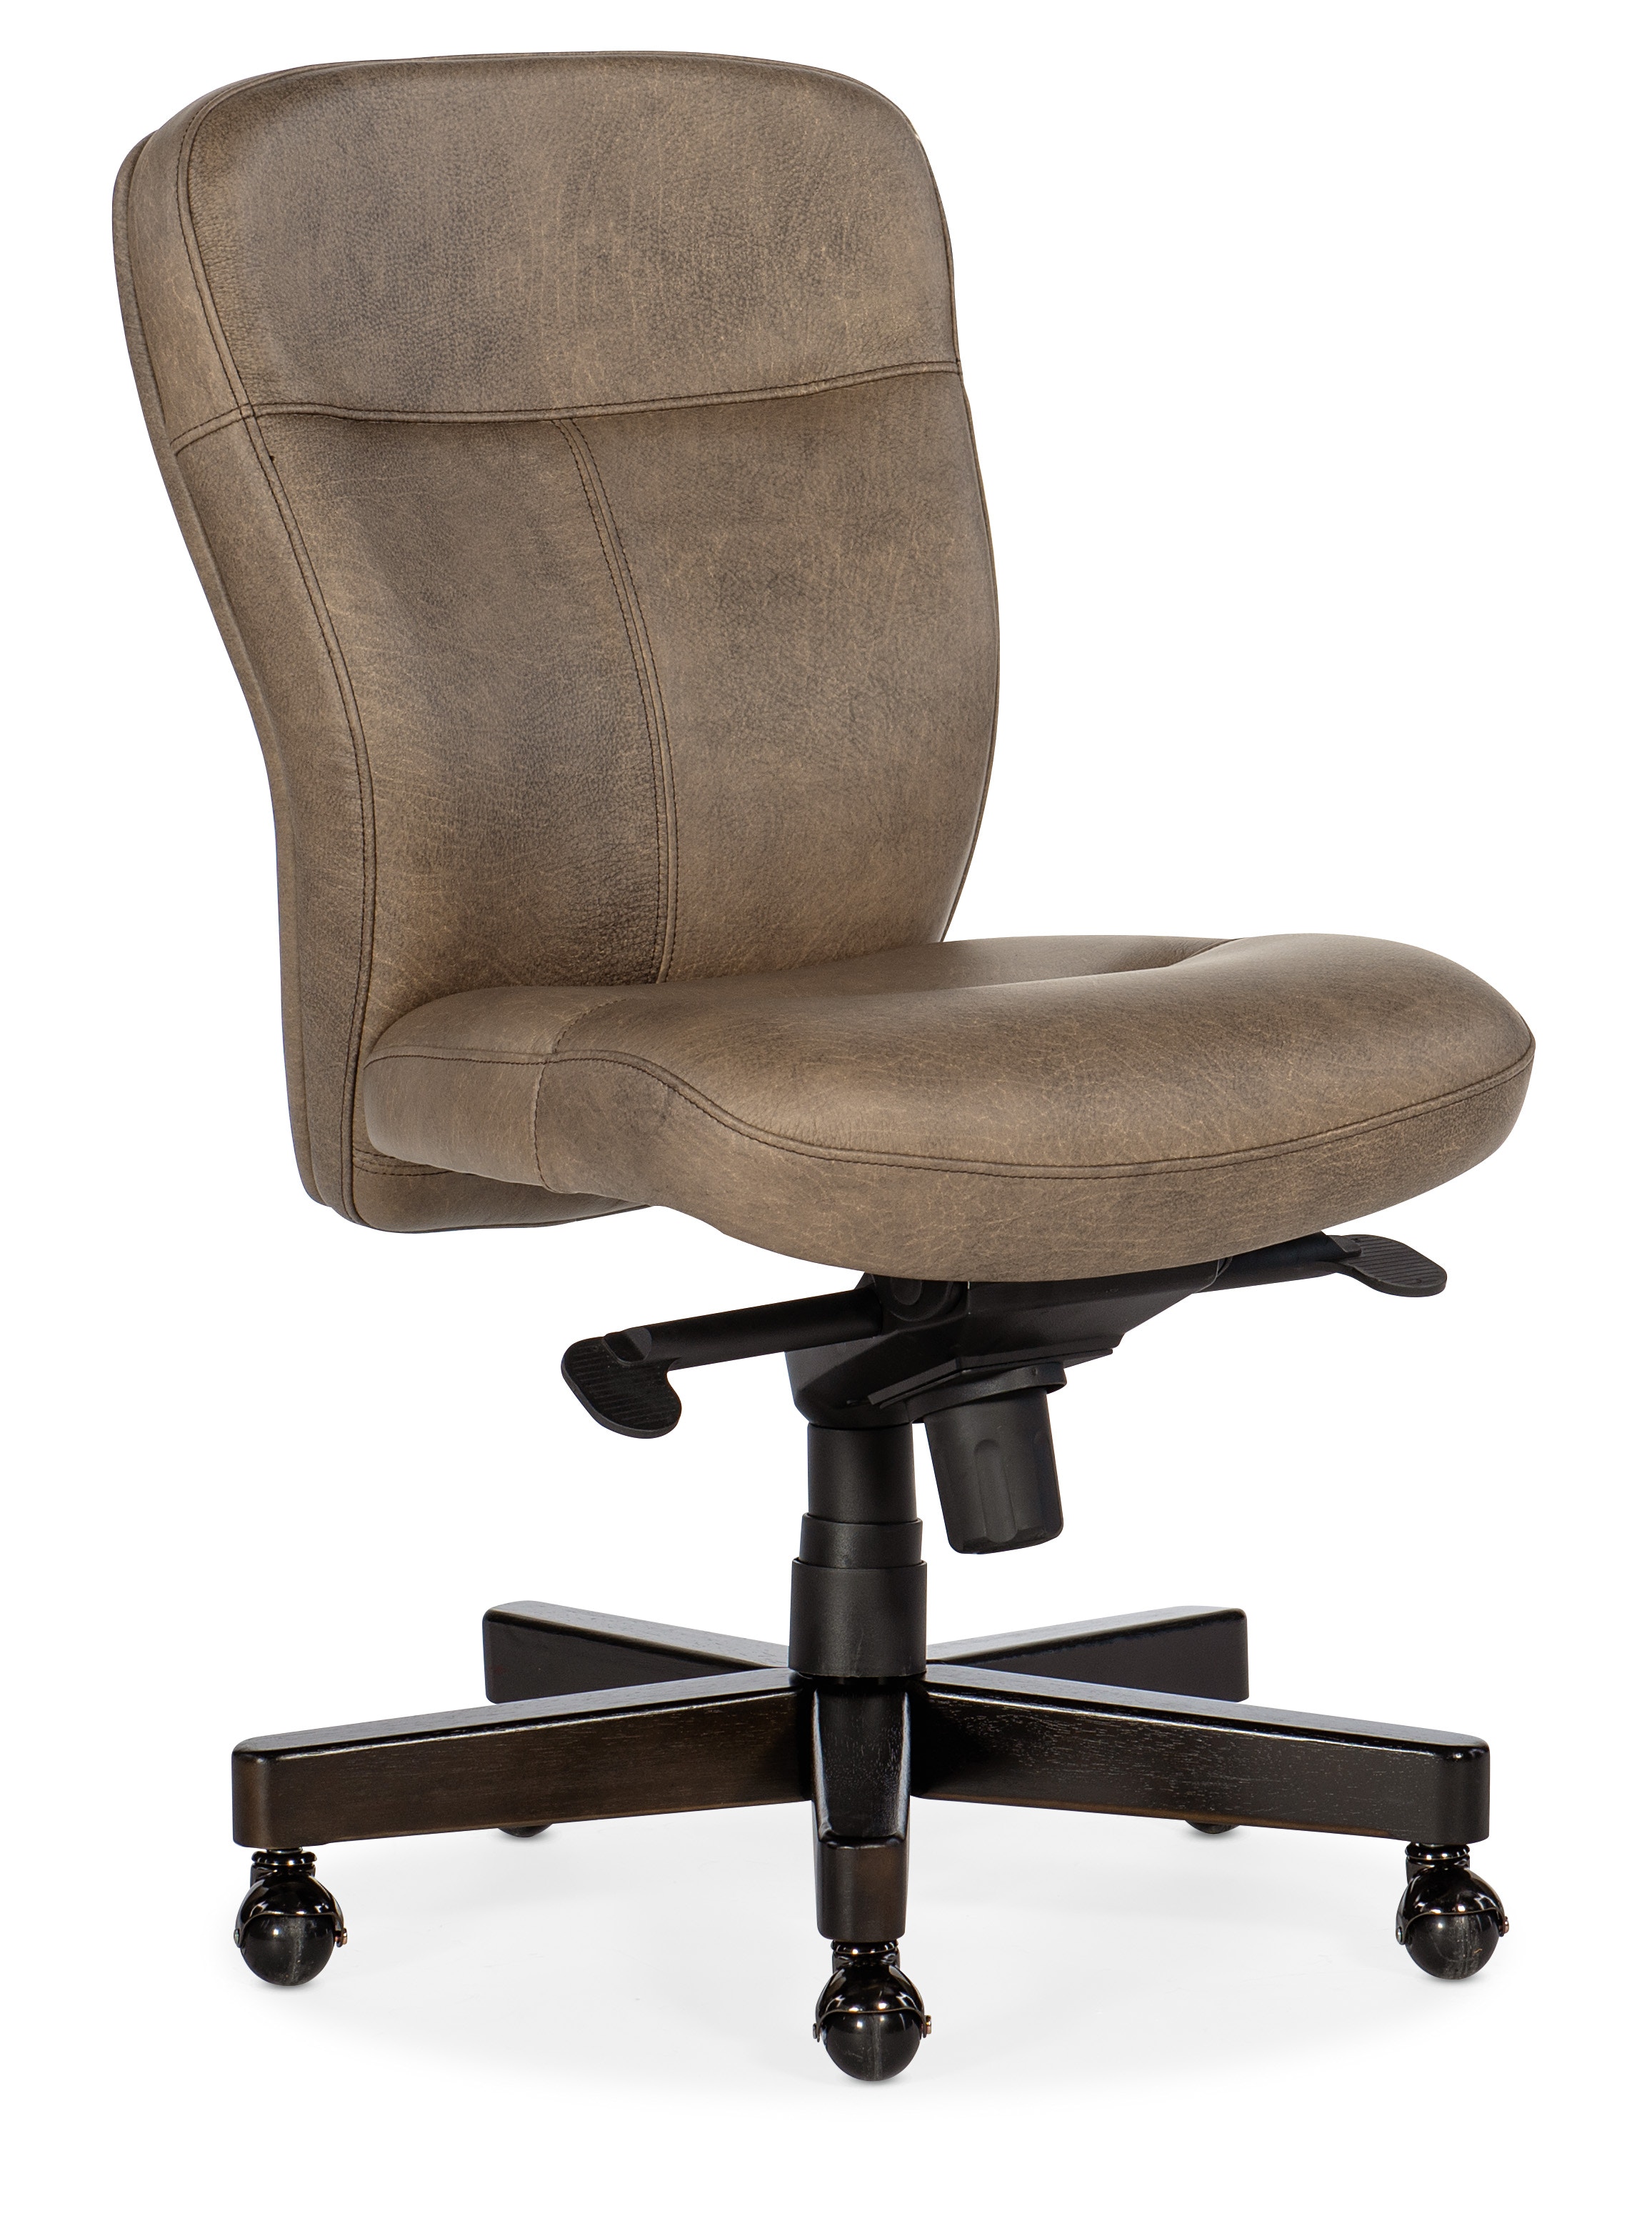 Hooker Furniture Home Office Sasha Executive Swivel Tilt Chair 